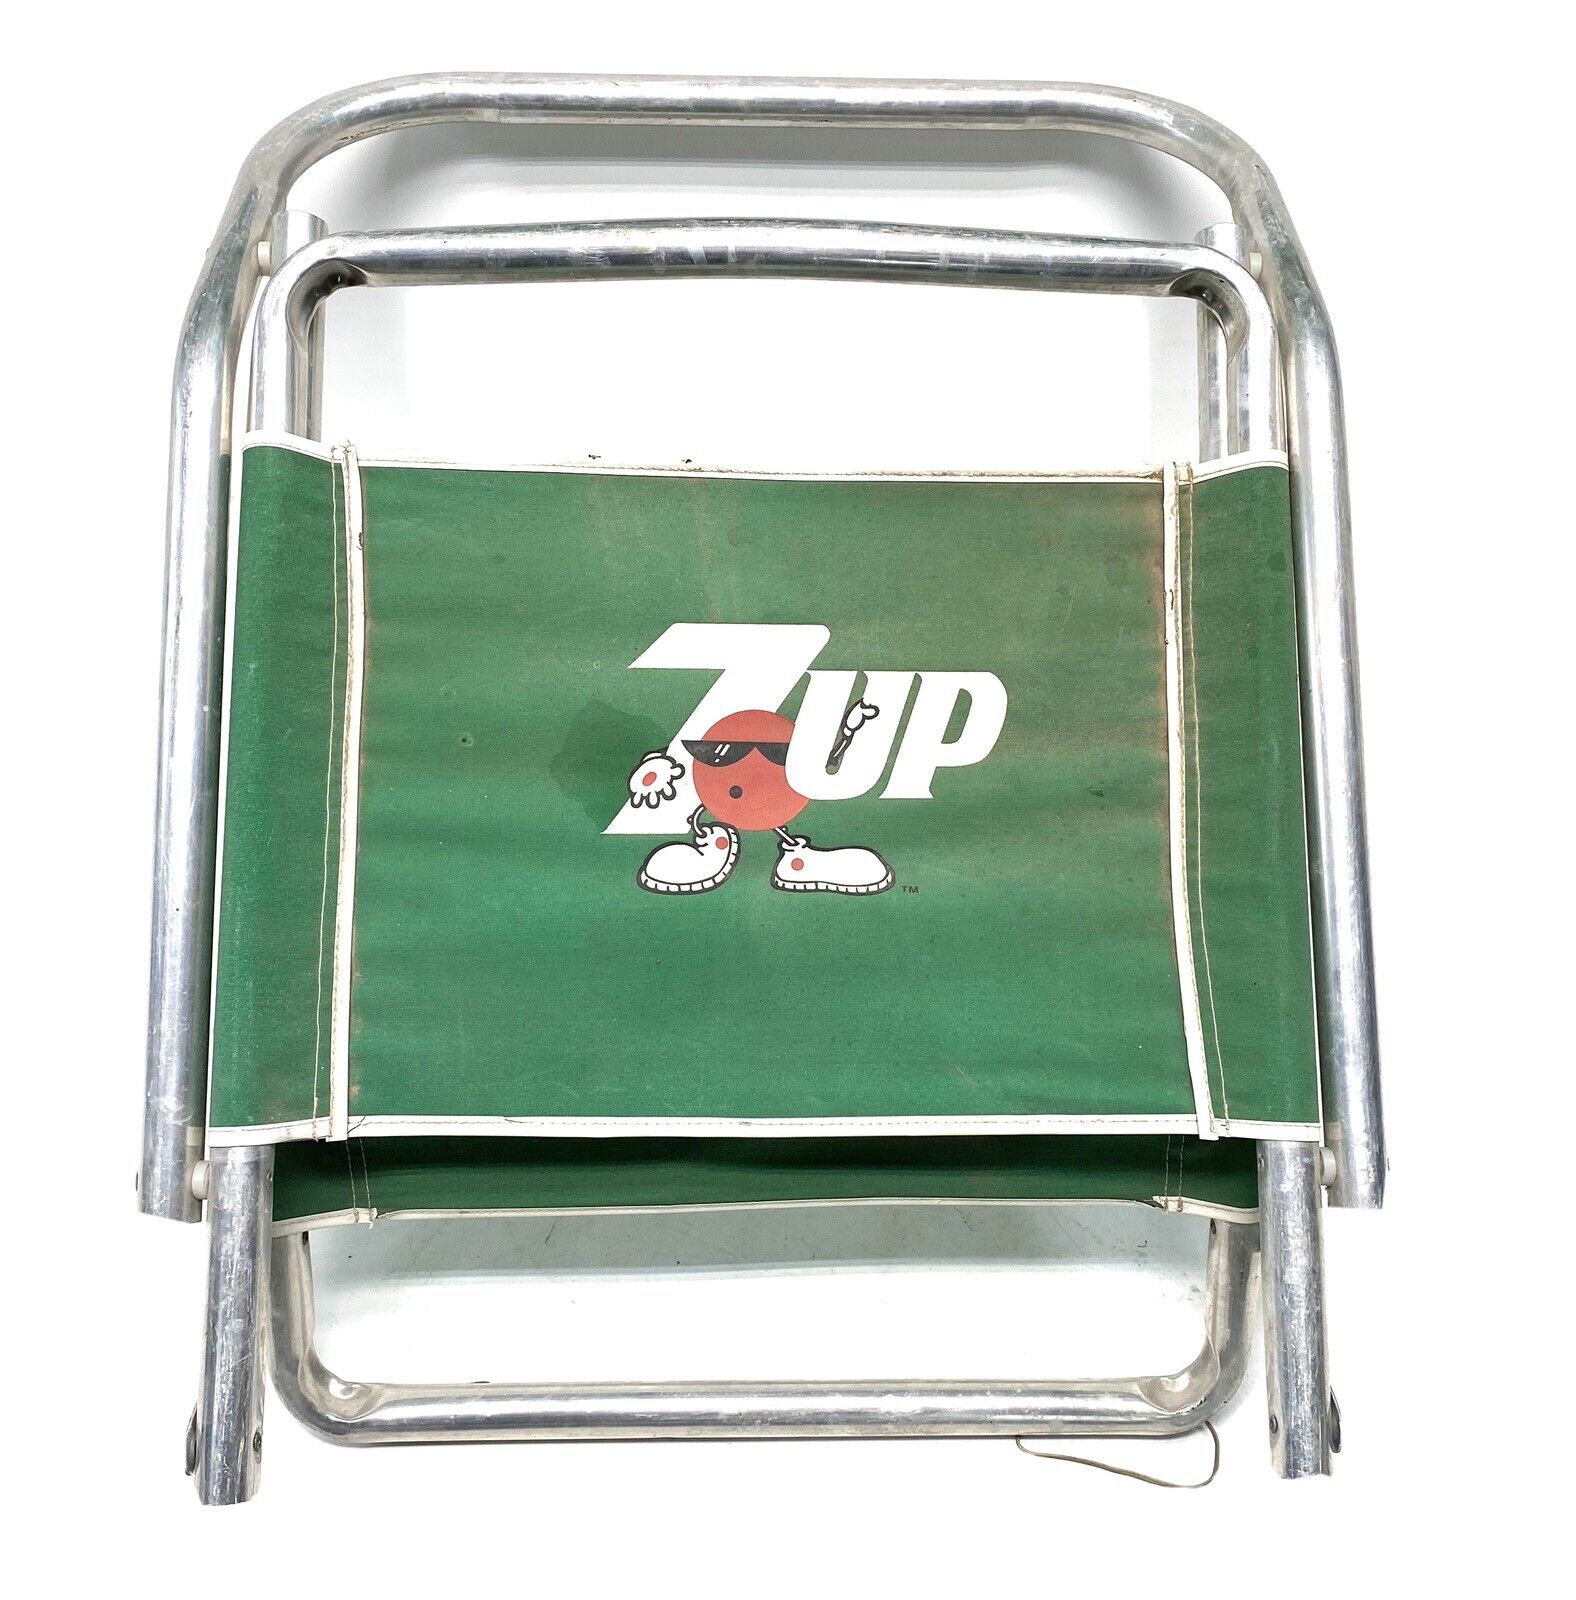 vintage folding beach stadium chair 7up logo aluminum frame soda pop